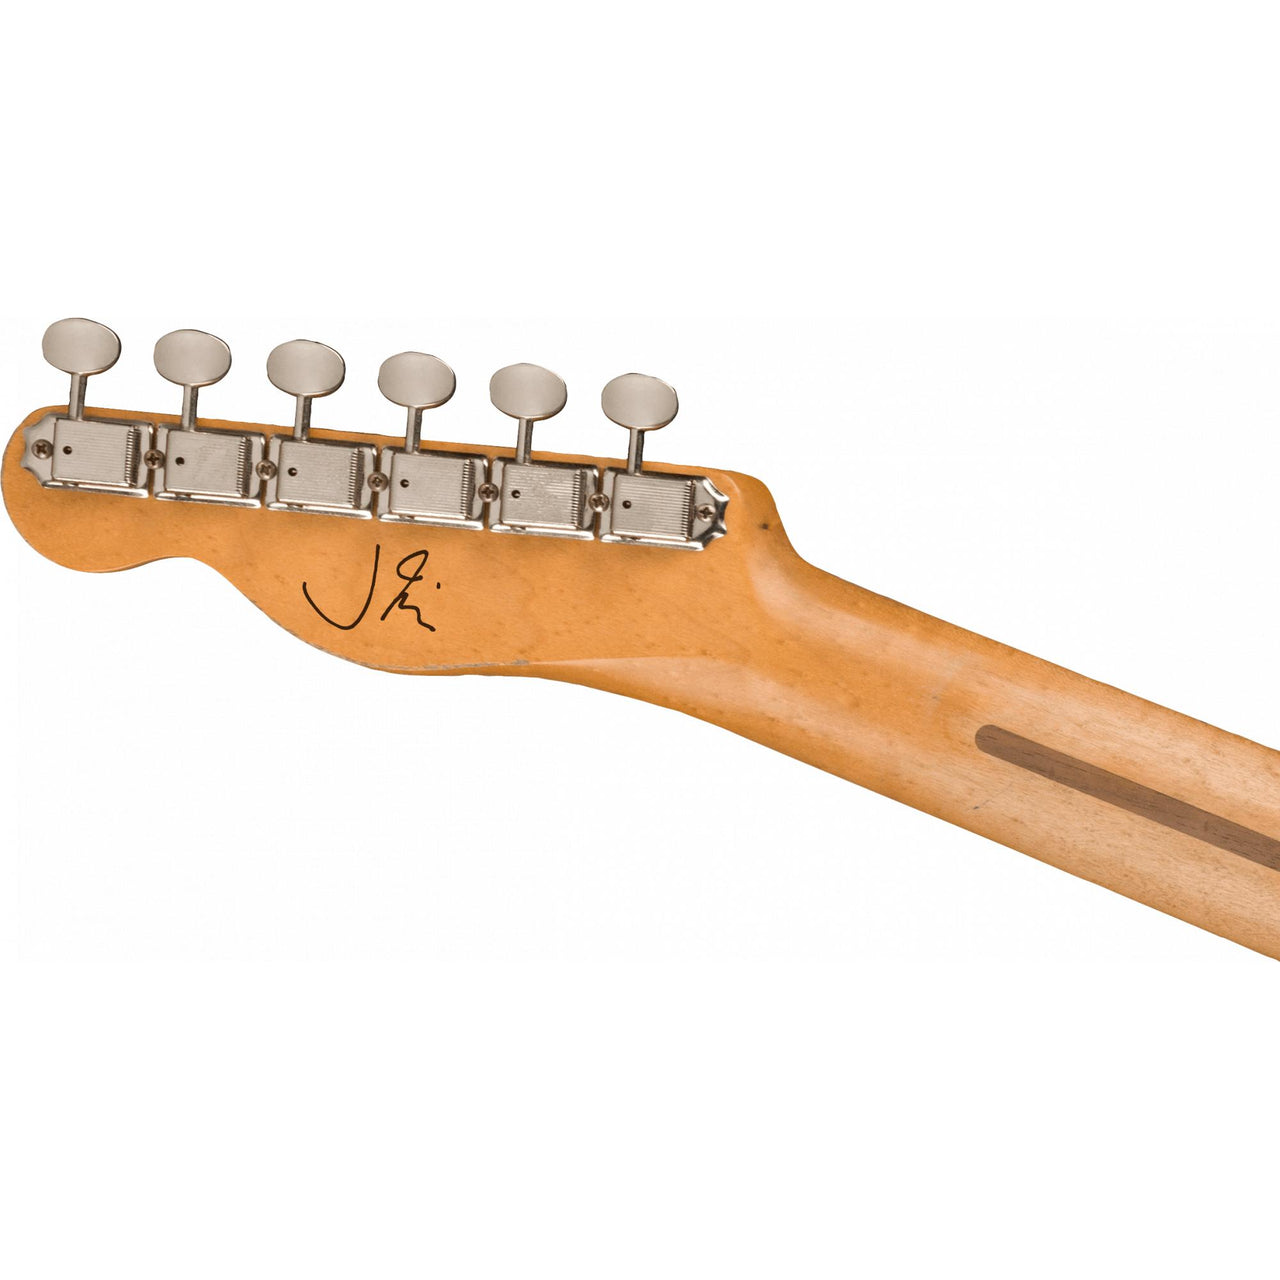 Guitarra Electrica Fender J Mascis Telecaster Mx Rocket Blue0140262326